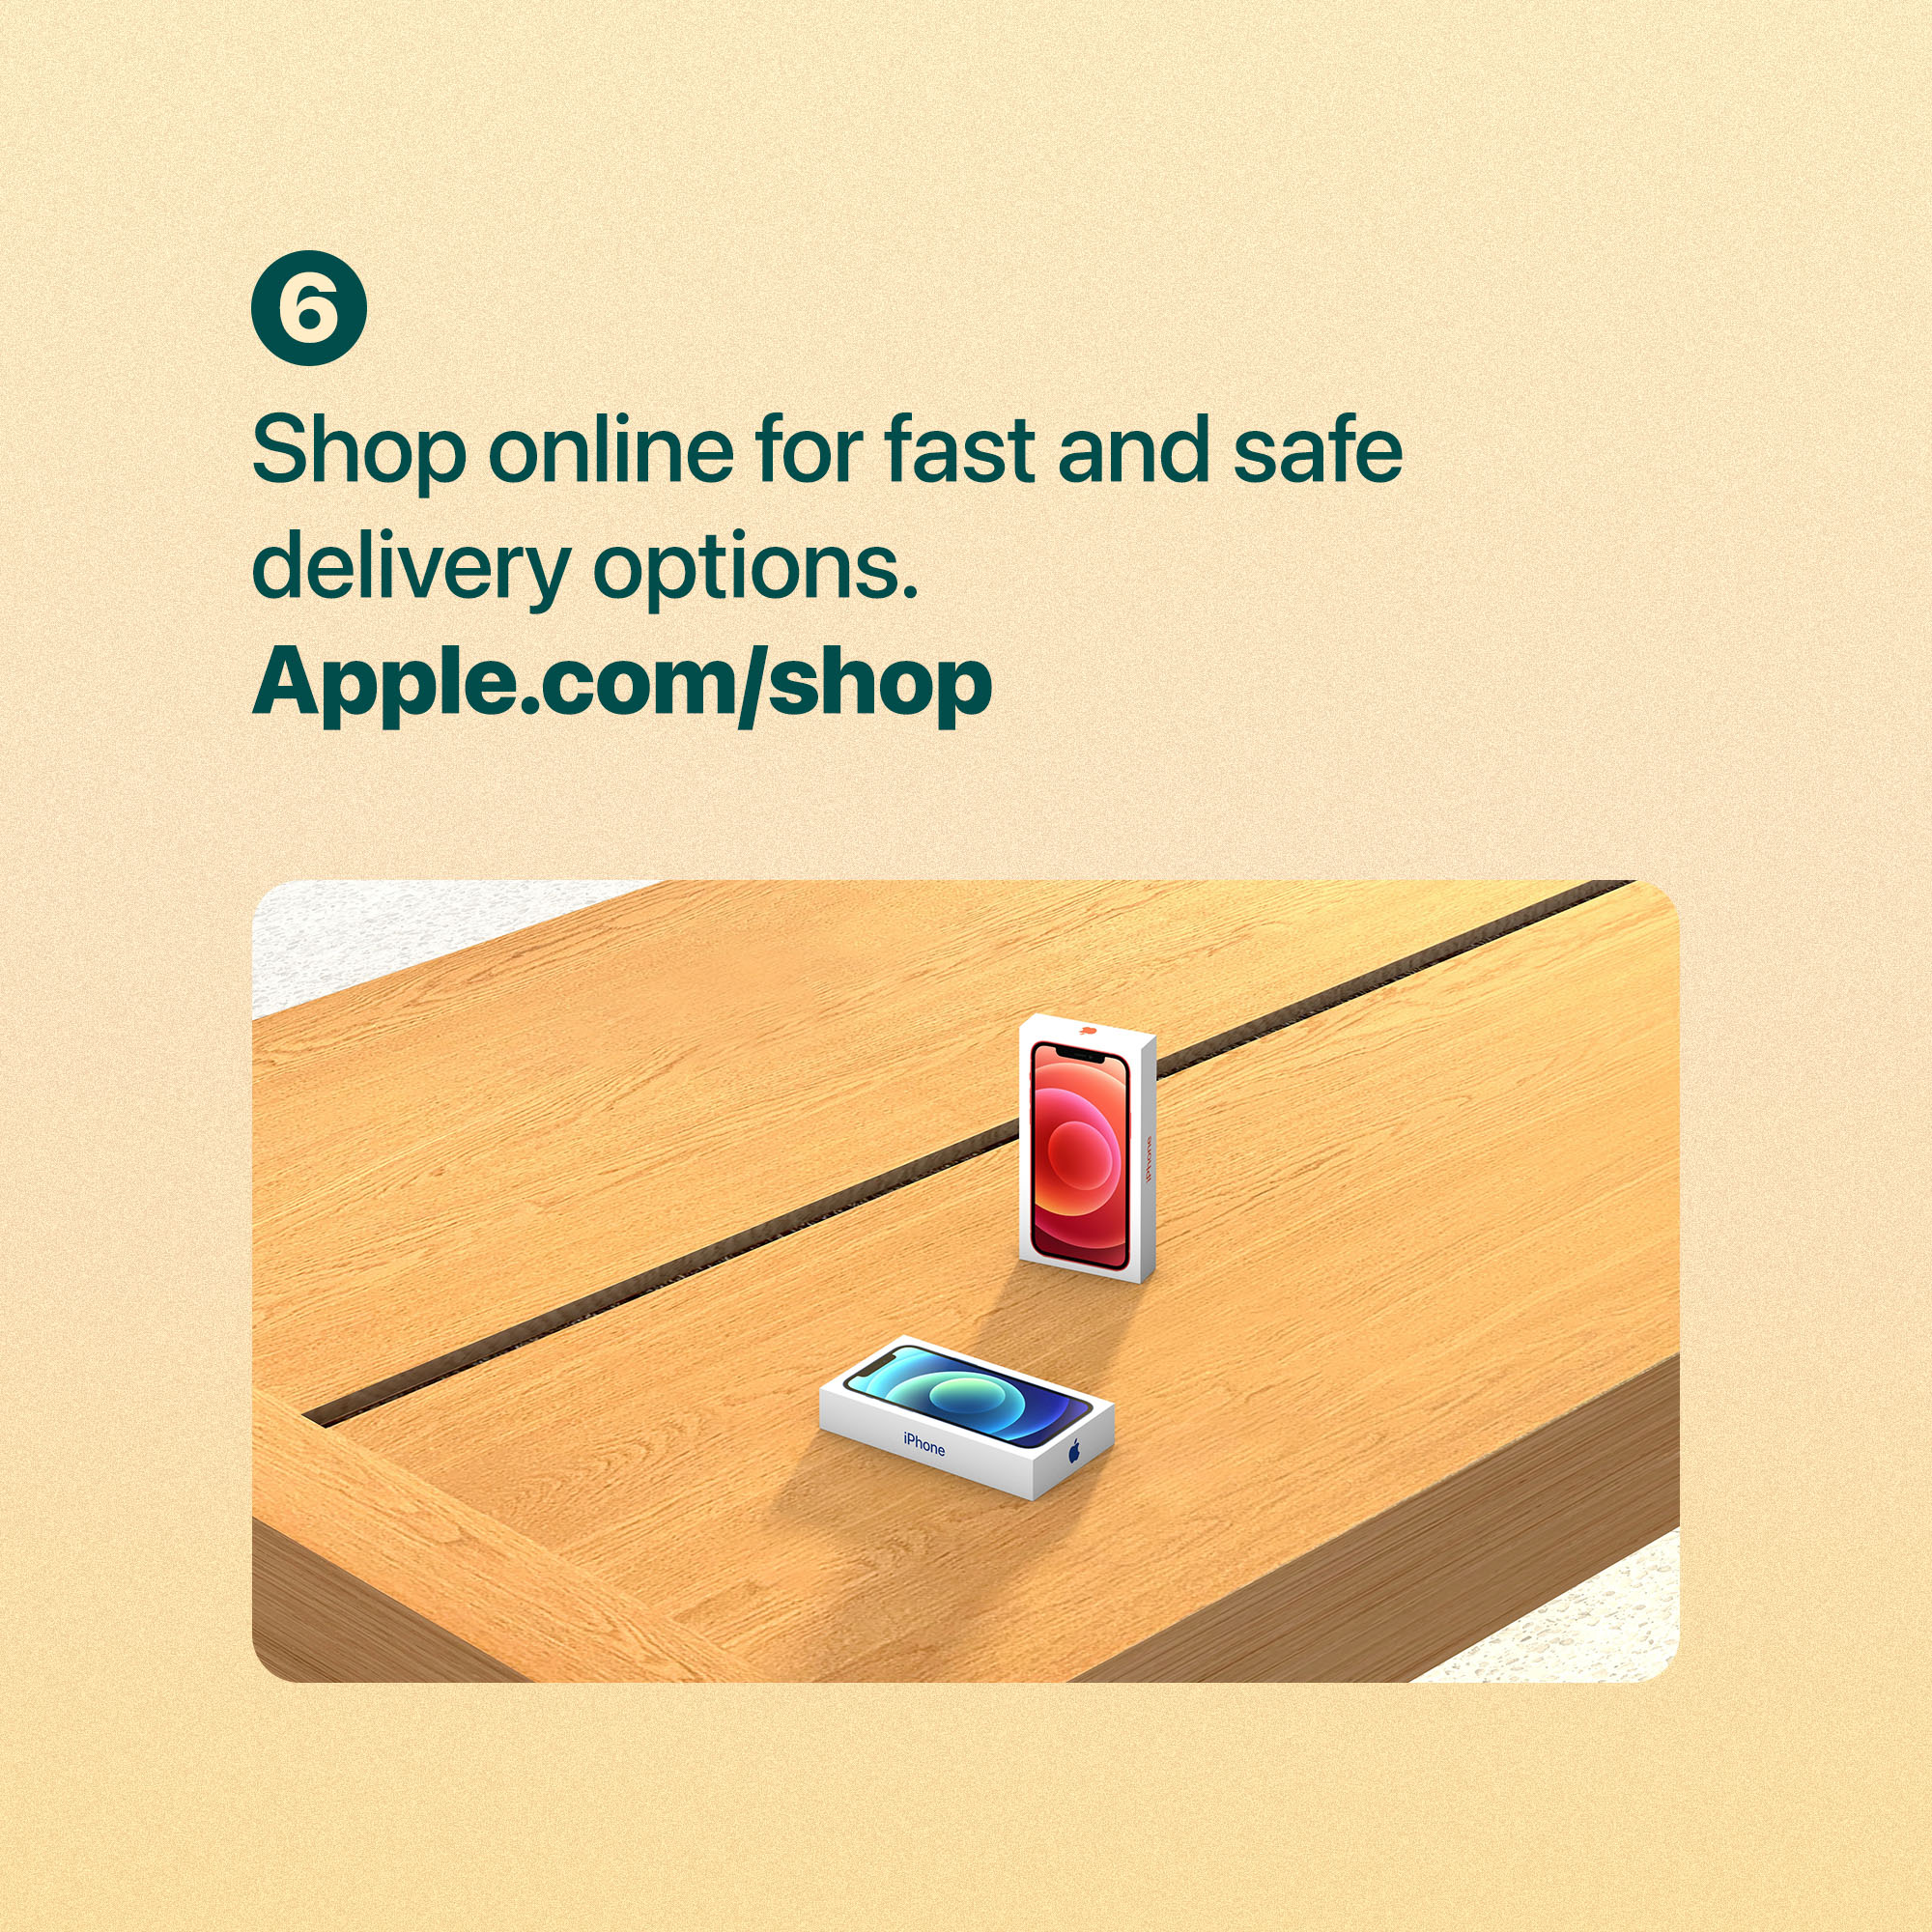 Shop online for fast and safe delivery options. Apple.com/shop.